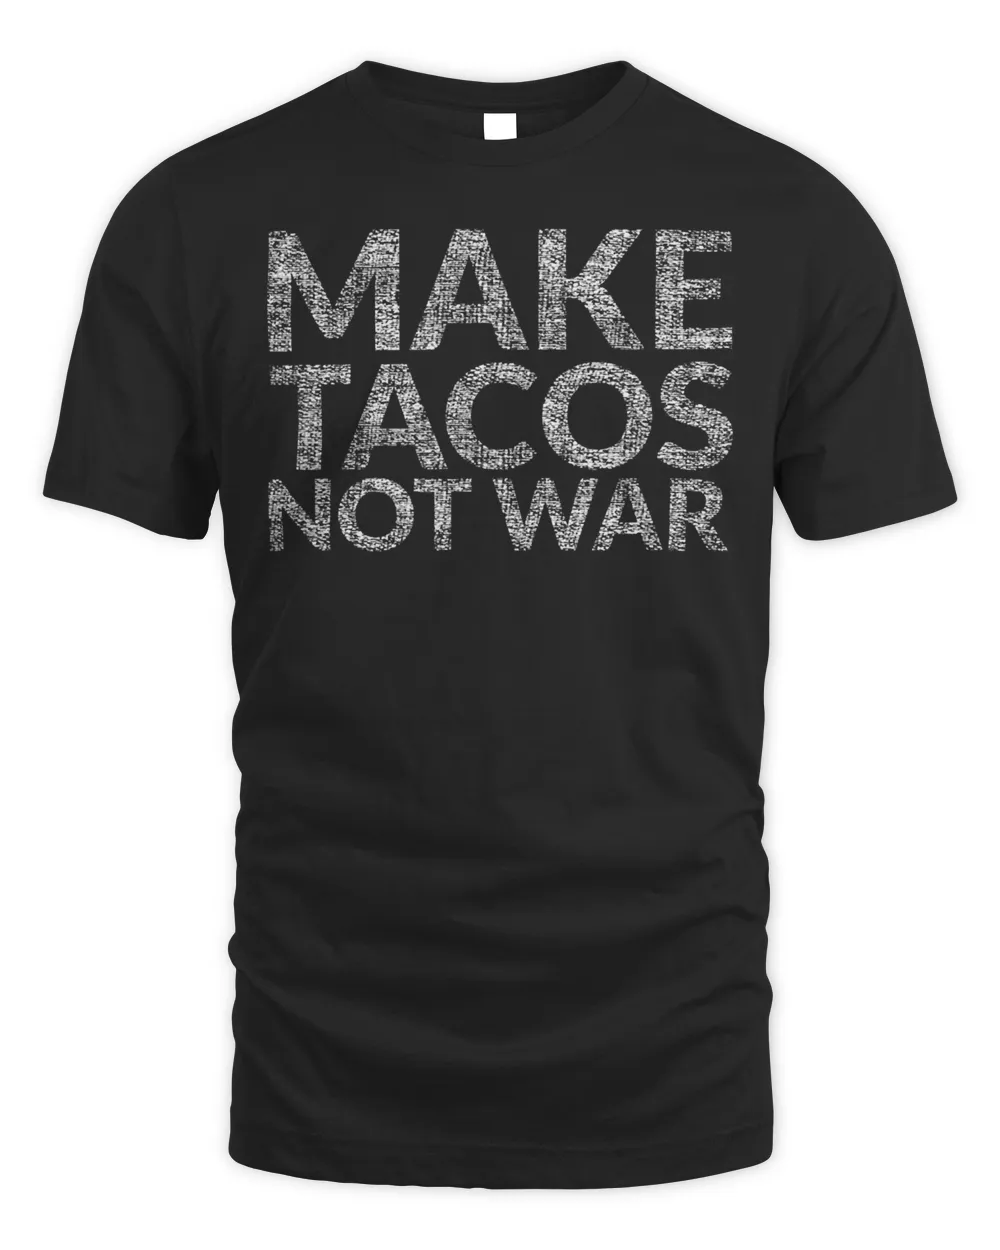 Make Tacos Not War (I Love Tacos For Peace Design) T-Shirt